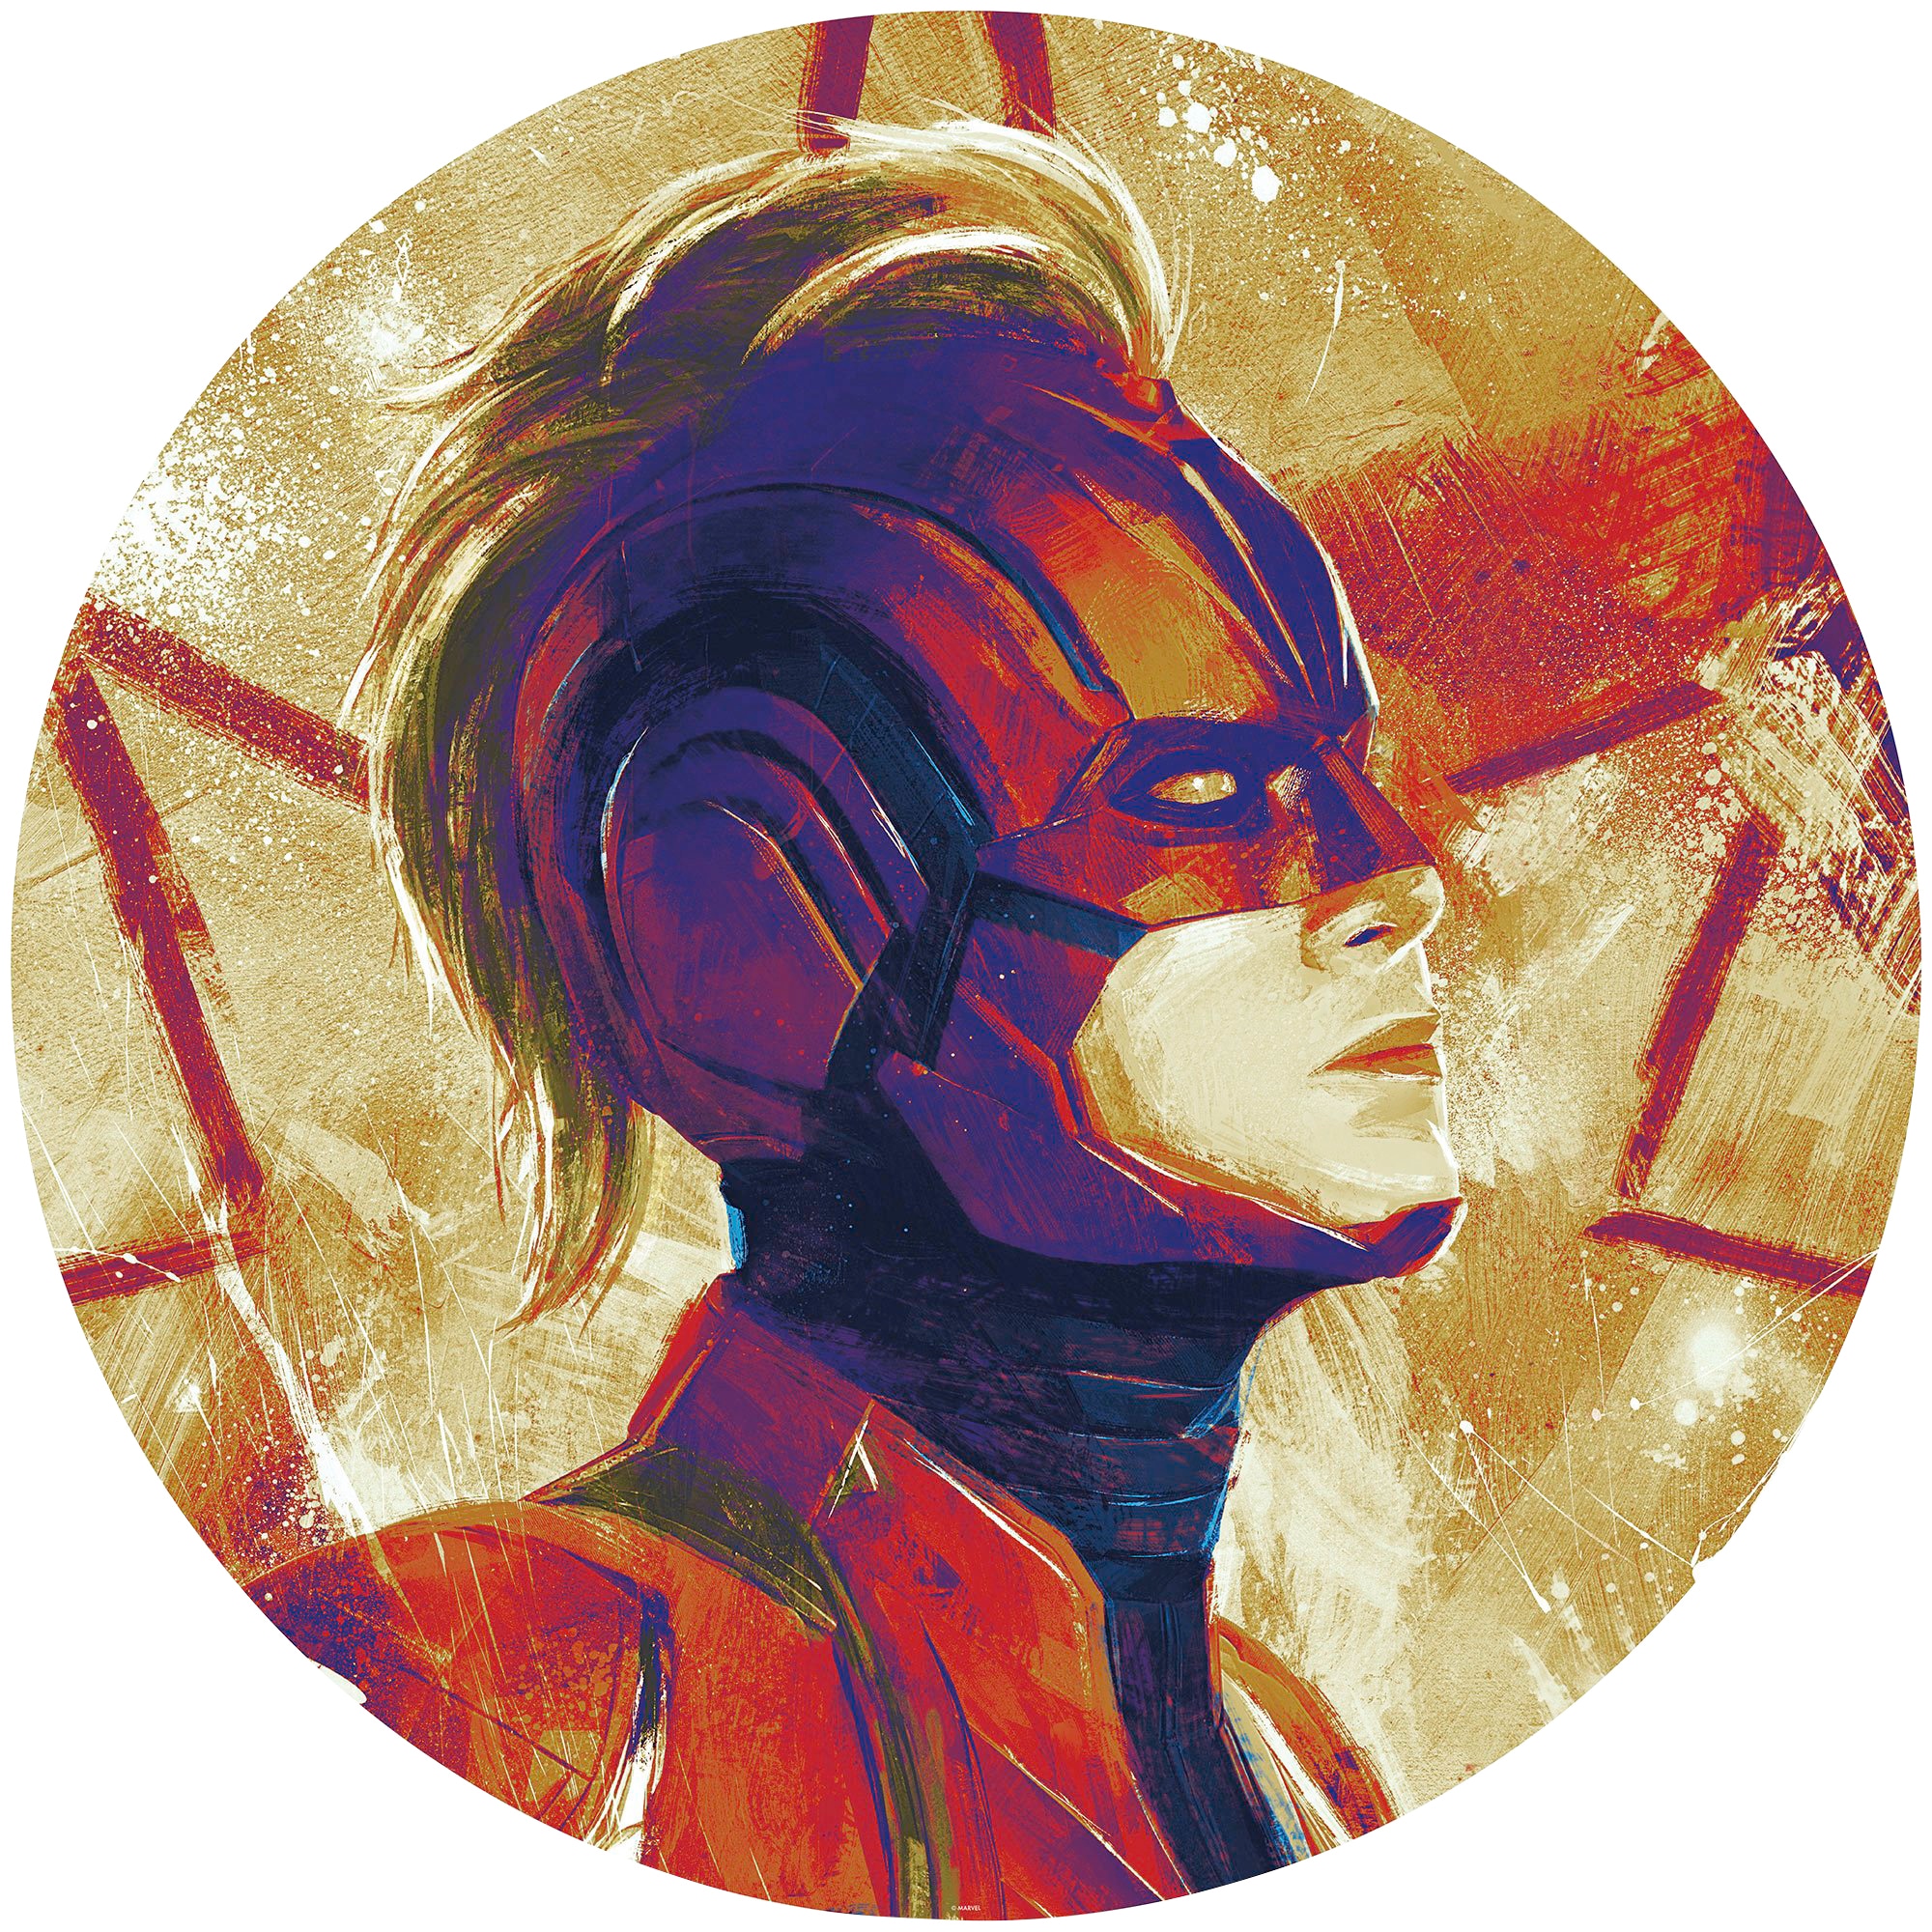 Komar Fototapete »Avengers Painting Captain Marvel Helmet«, 125x125 cm (Breite x Höhe), rund und selbstklebend